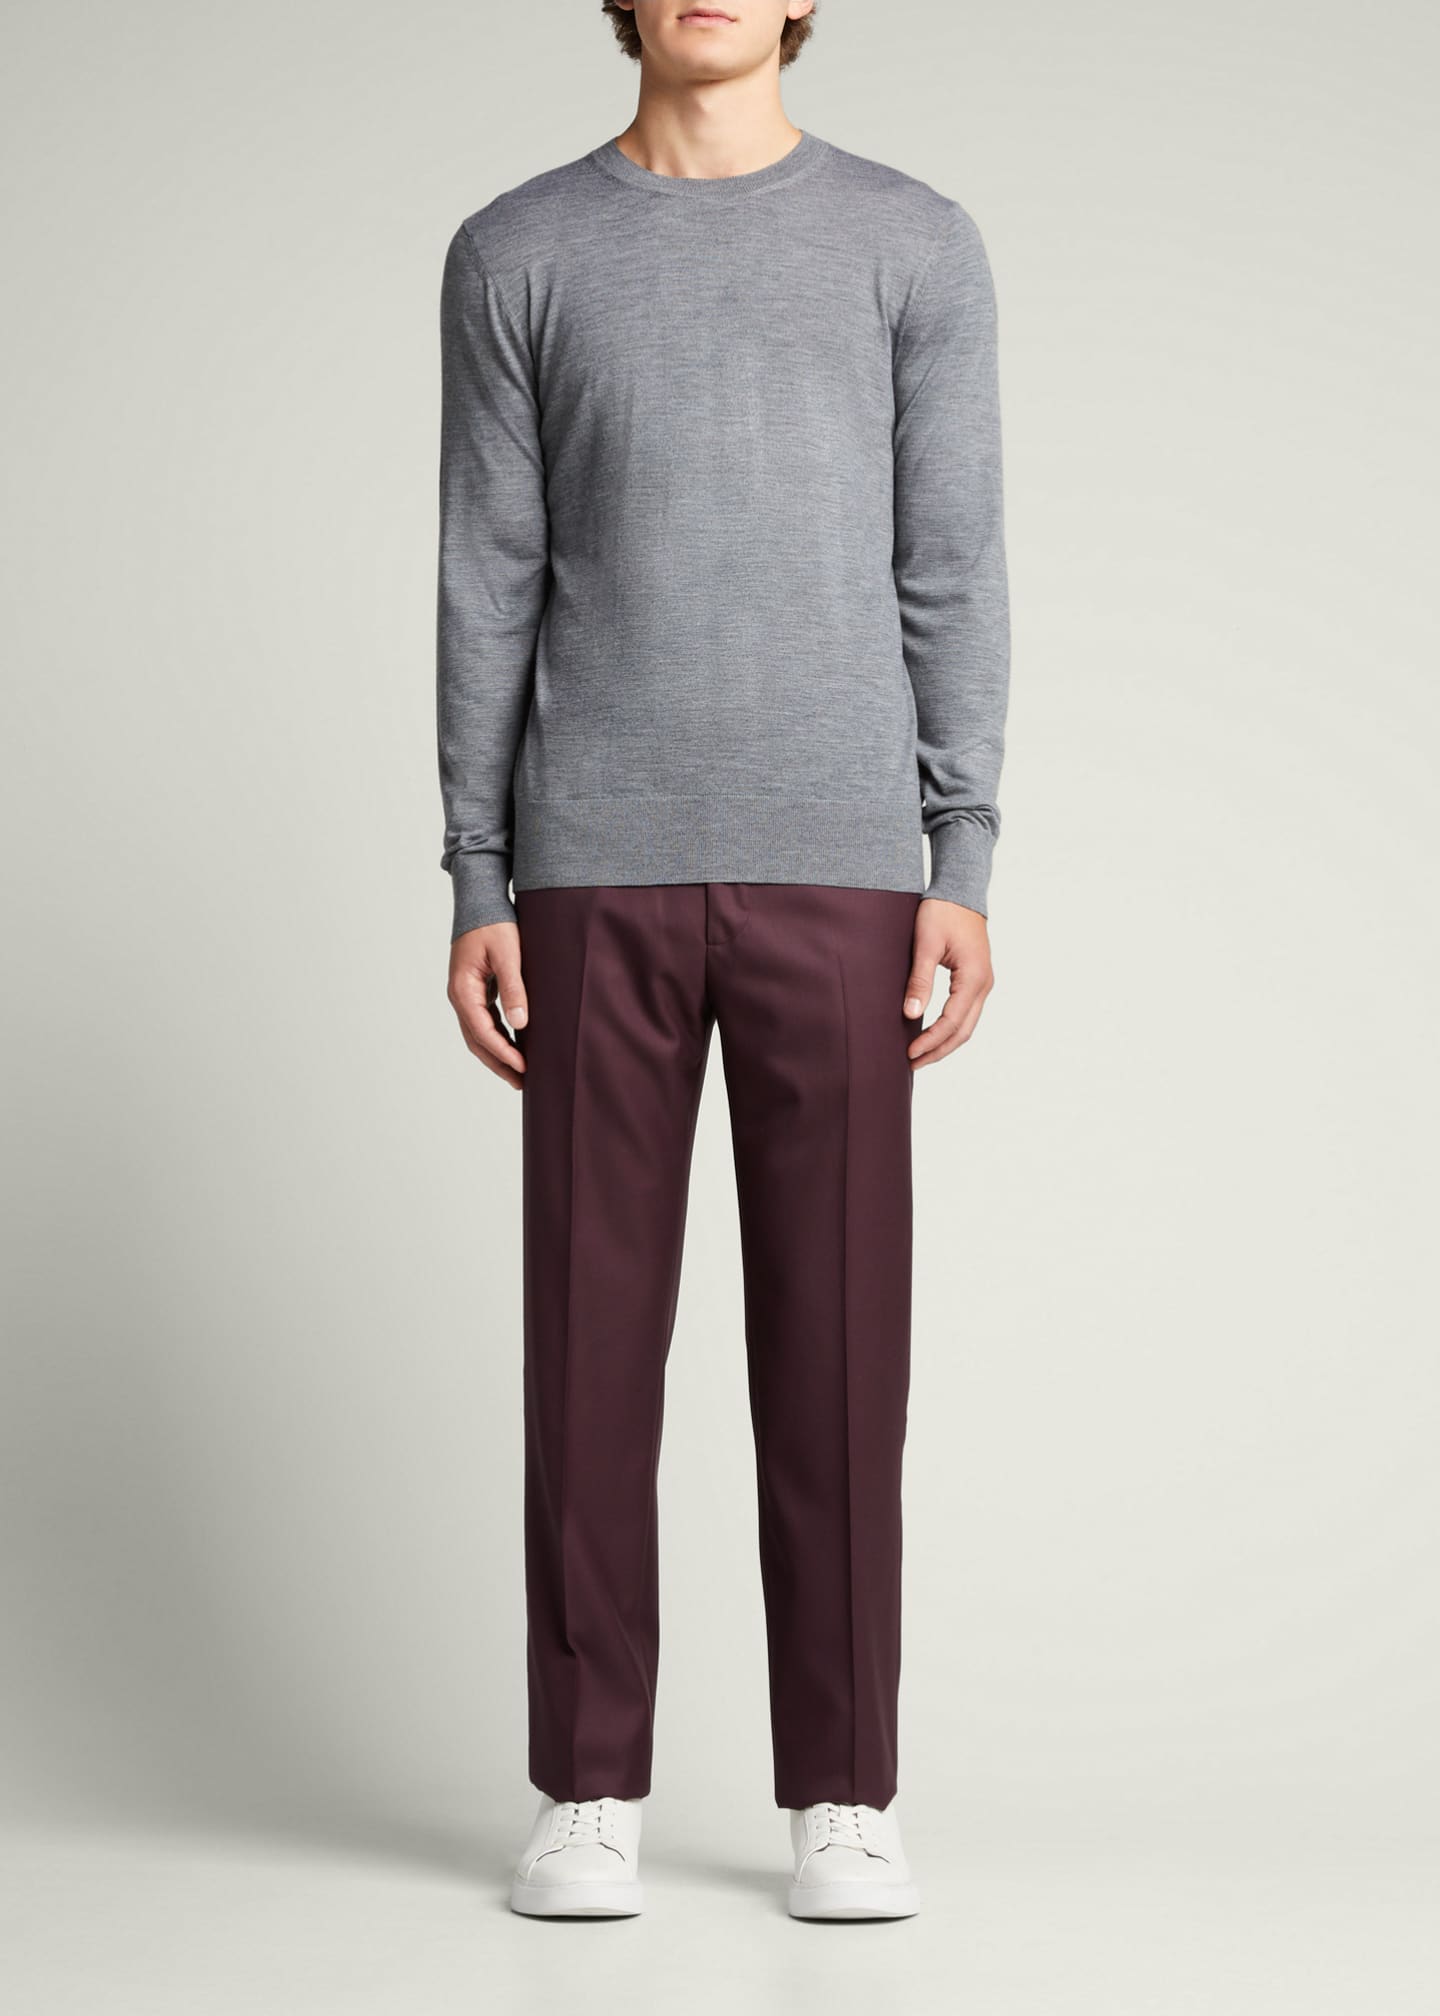 Gabriela Hearst Men's Wool Crew Sweater - Bergdorf Goodman